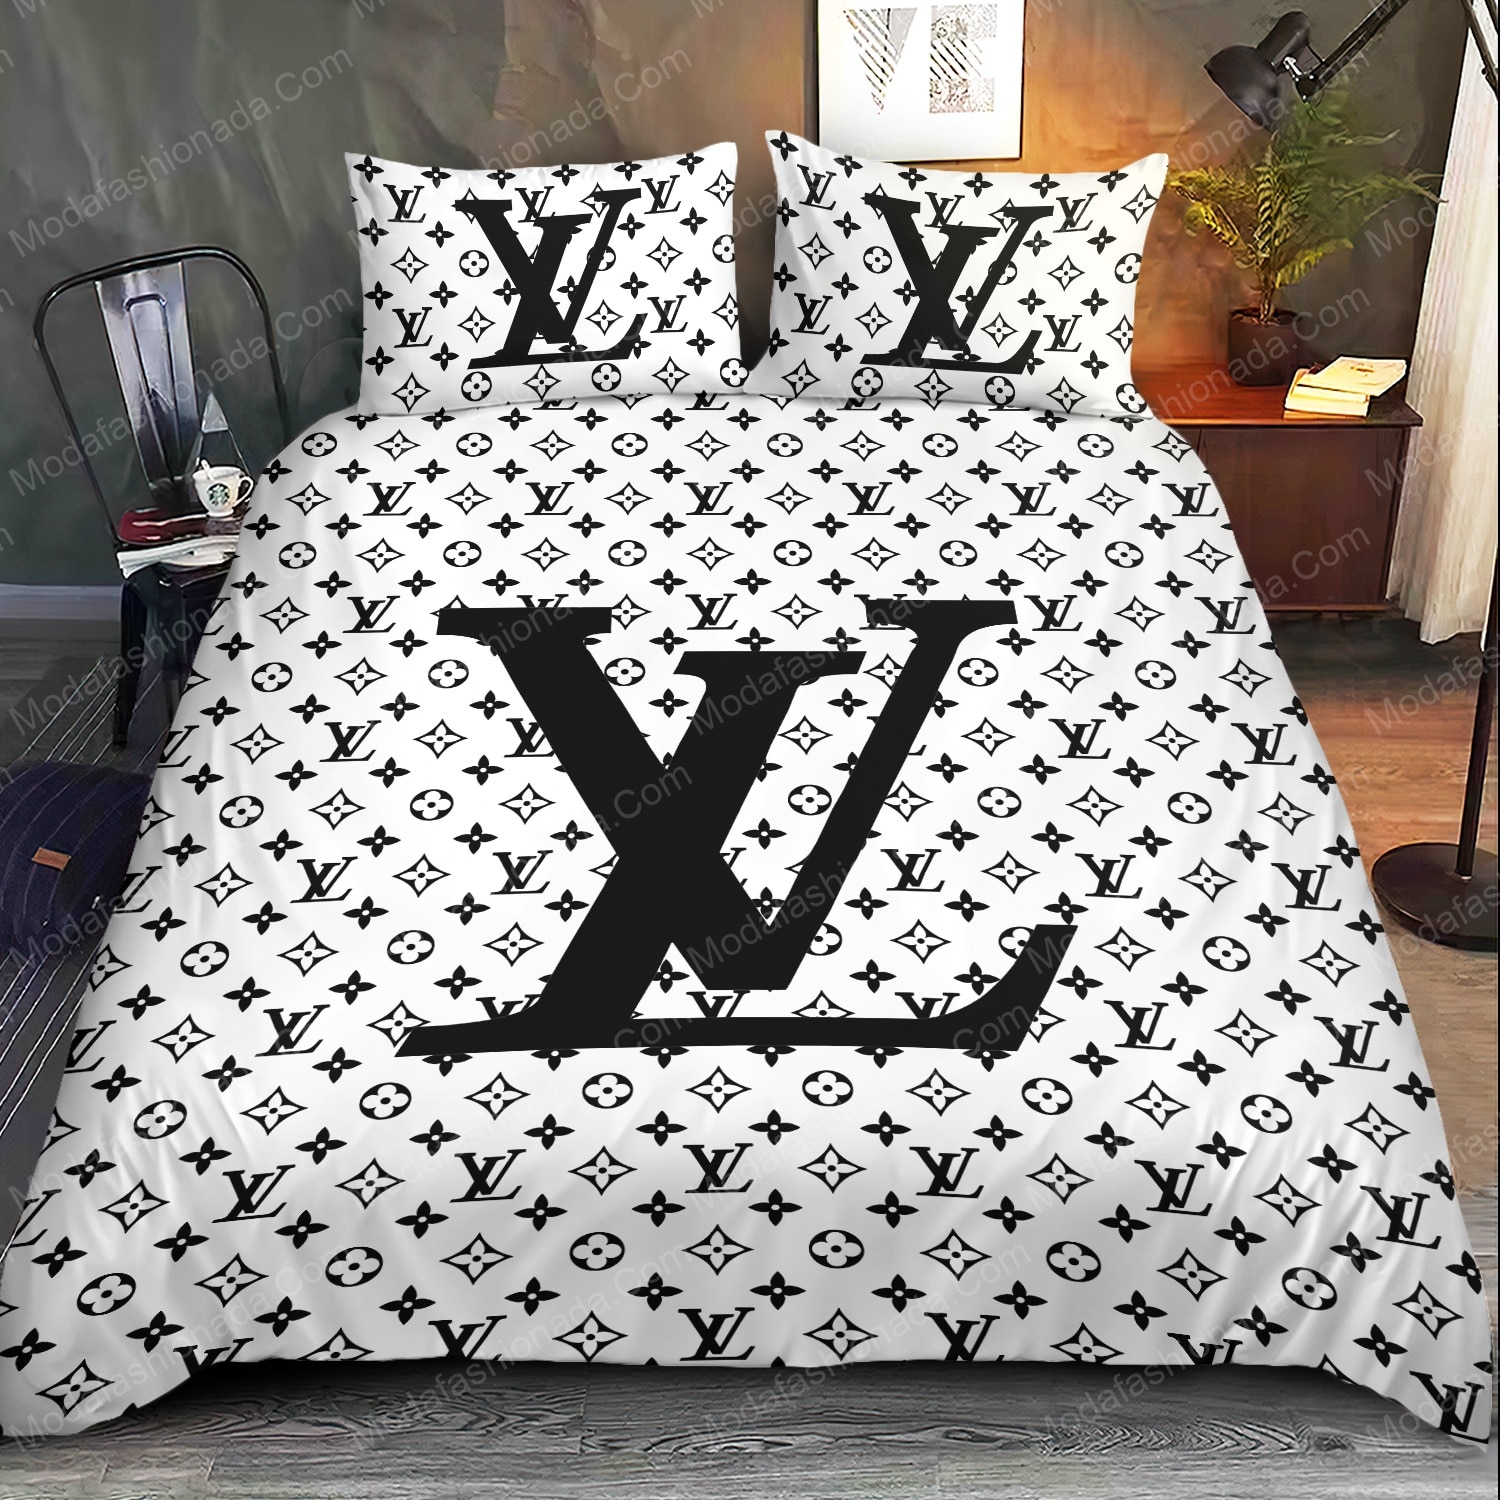 Buy Louis Vuitton Brands 14 Bedding Set Bed Sets